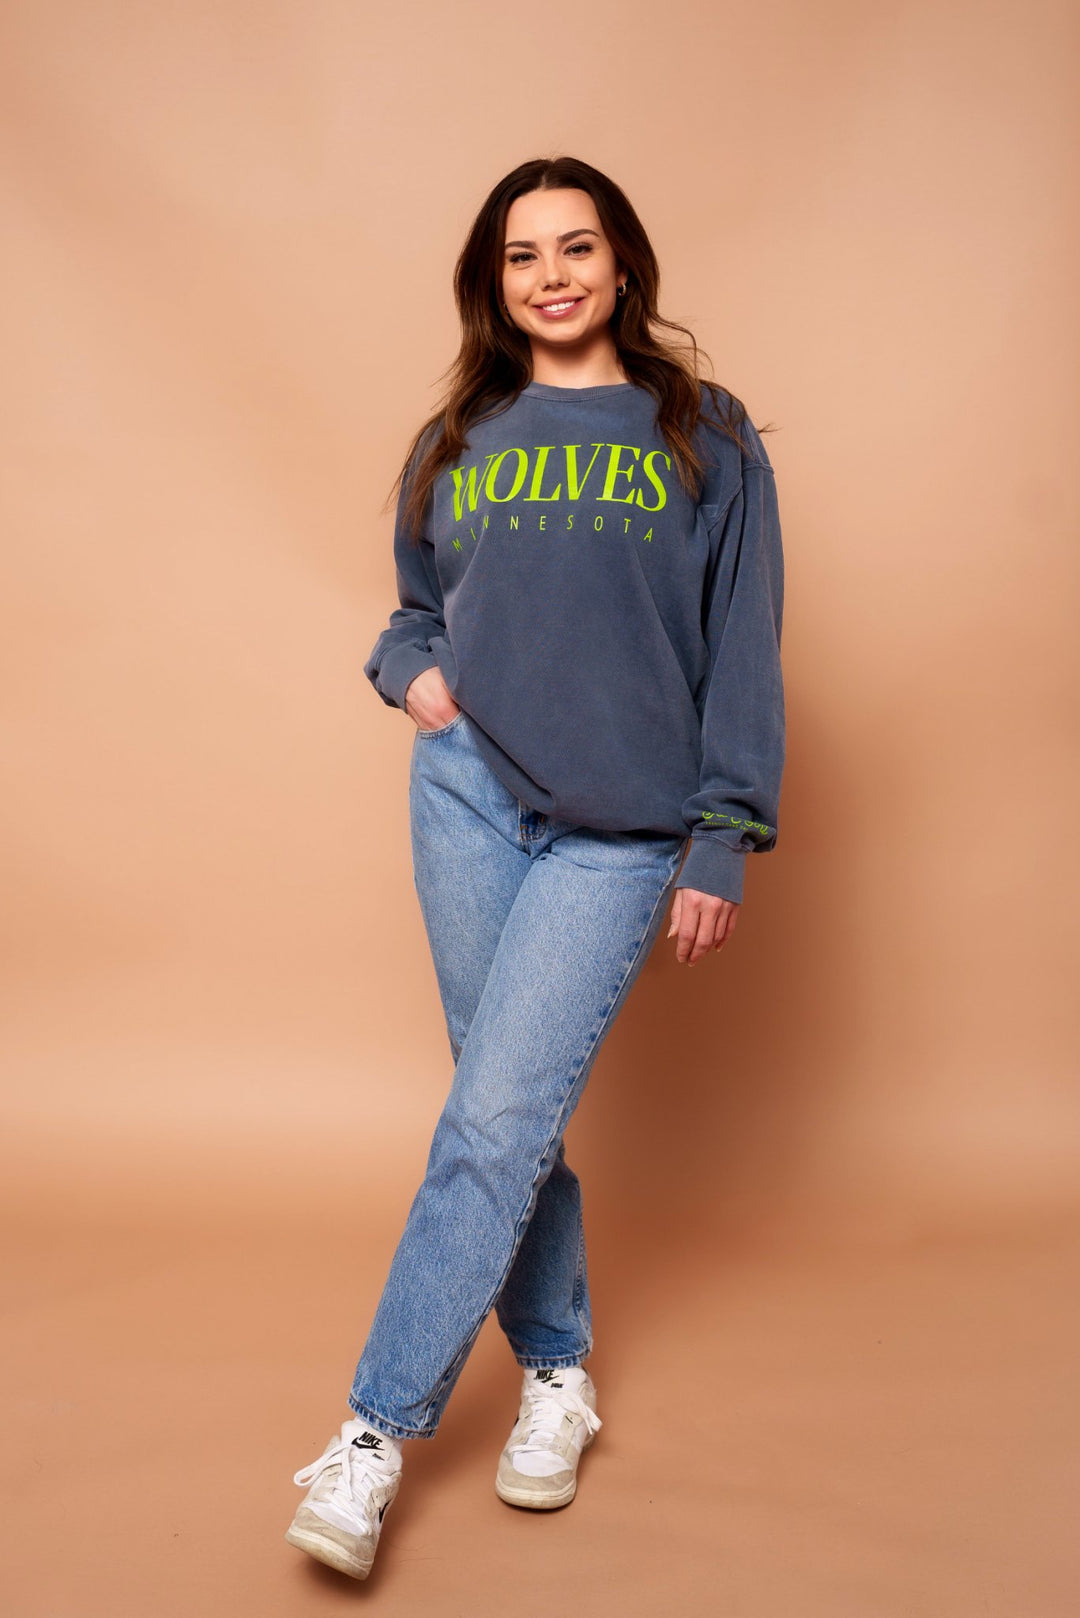 Wolves Vintage Oversized Crew - Fan Girl Clothing